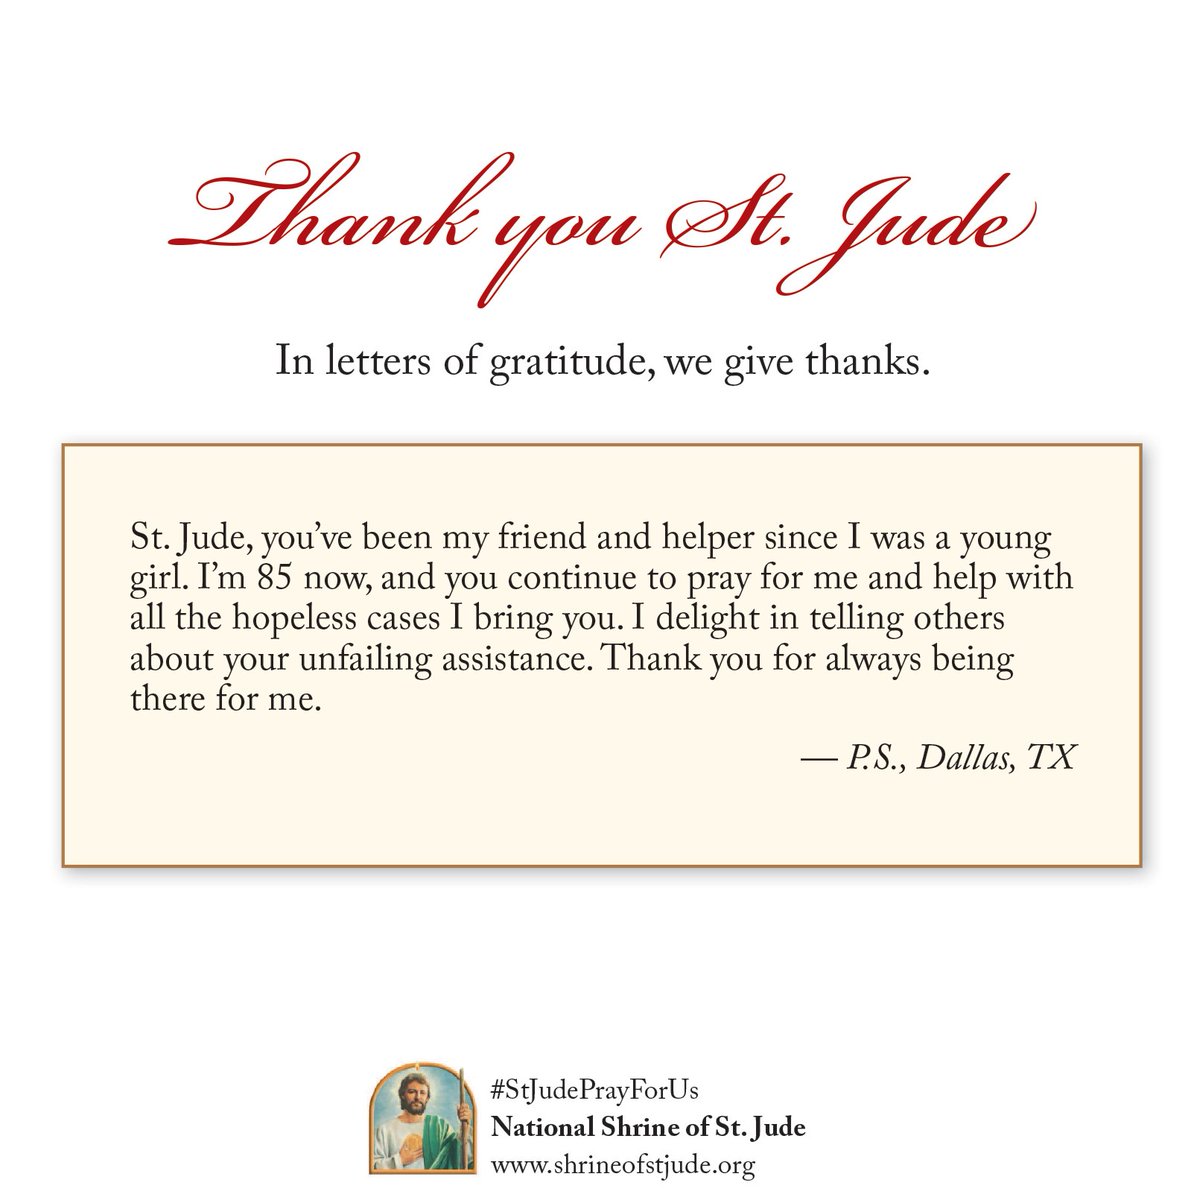 In letters of gratitude, we give thanks.

-

#ThankYouStJude #StJudePrayForUs #thankfulthursday #intercession #prayer #faith #hope #stjude #saintjude #catholic #intention #petition